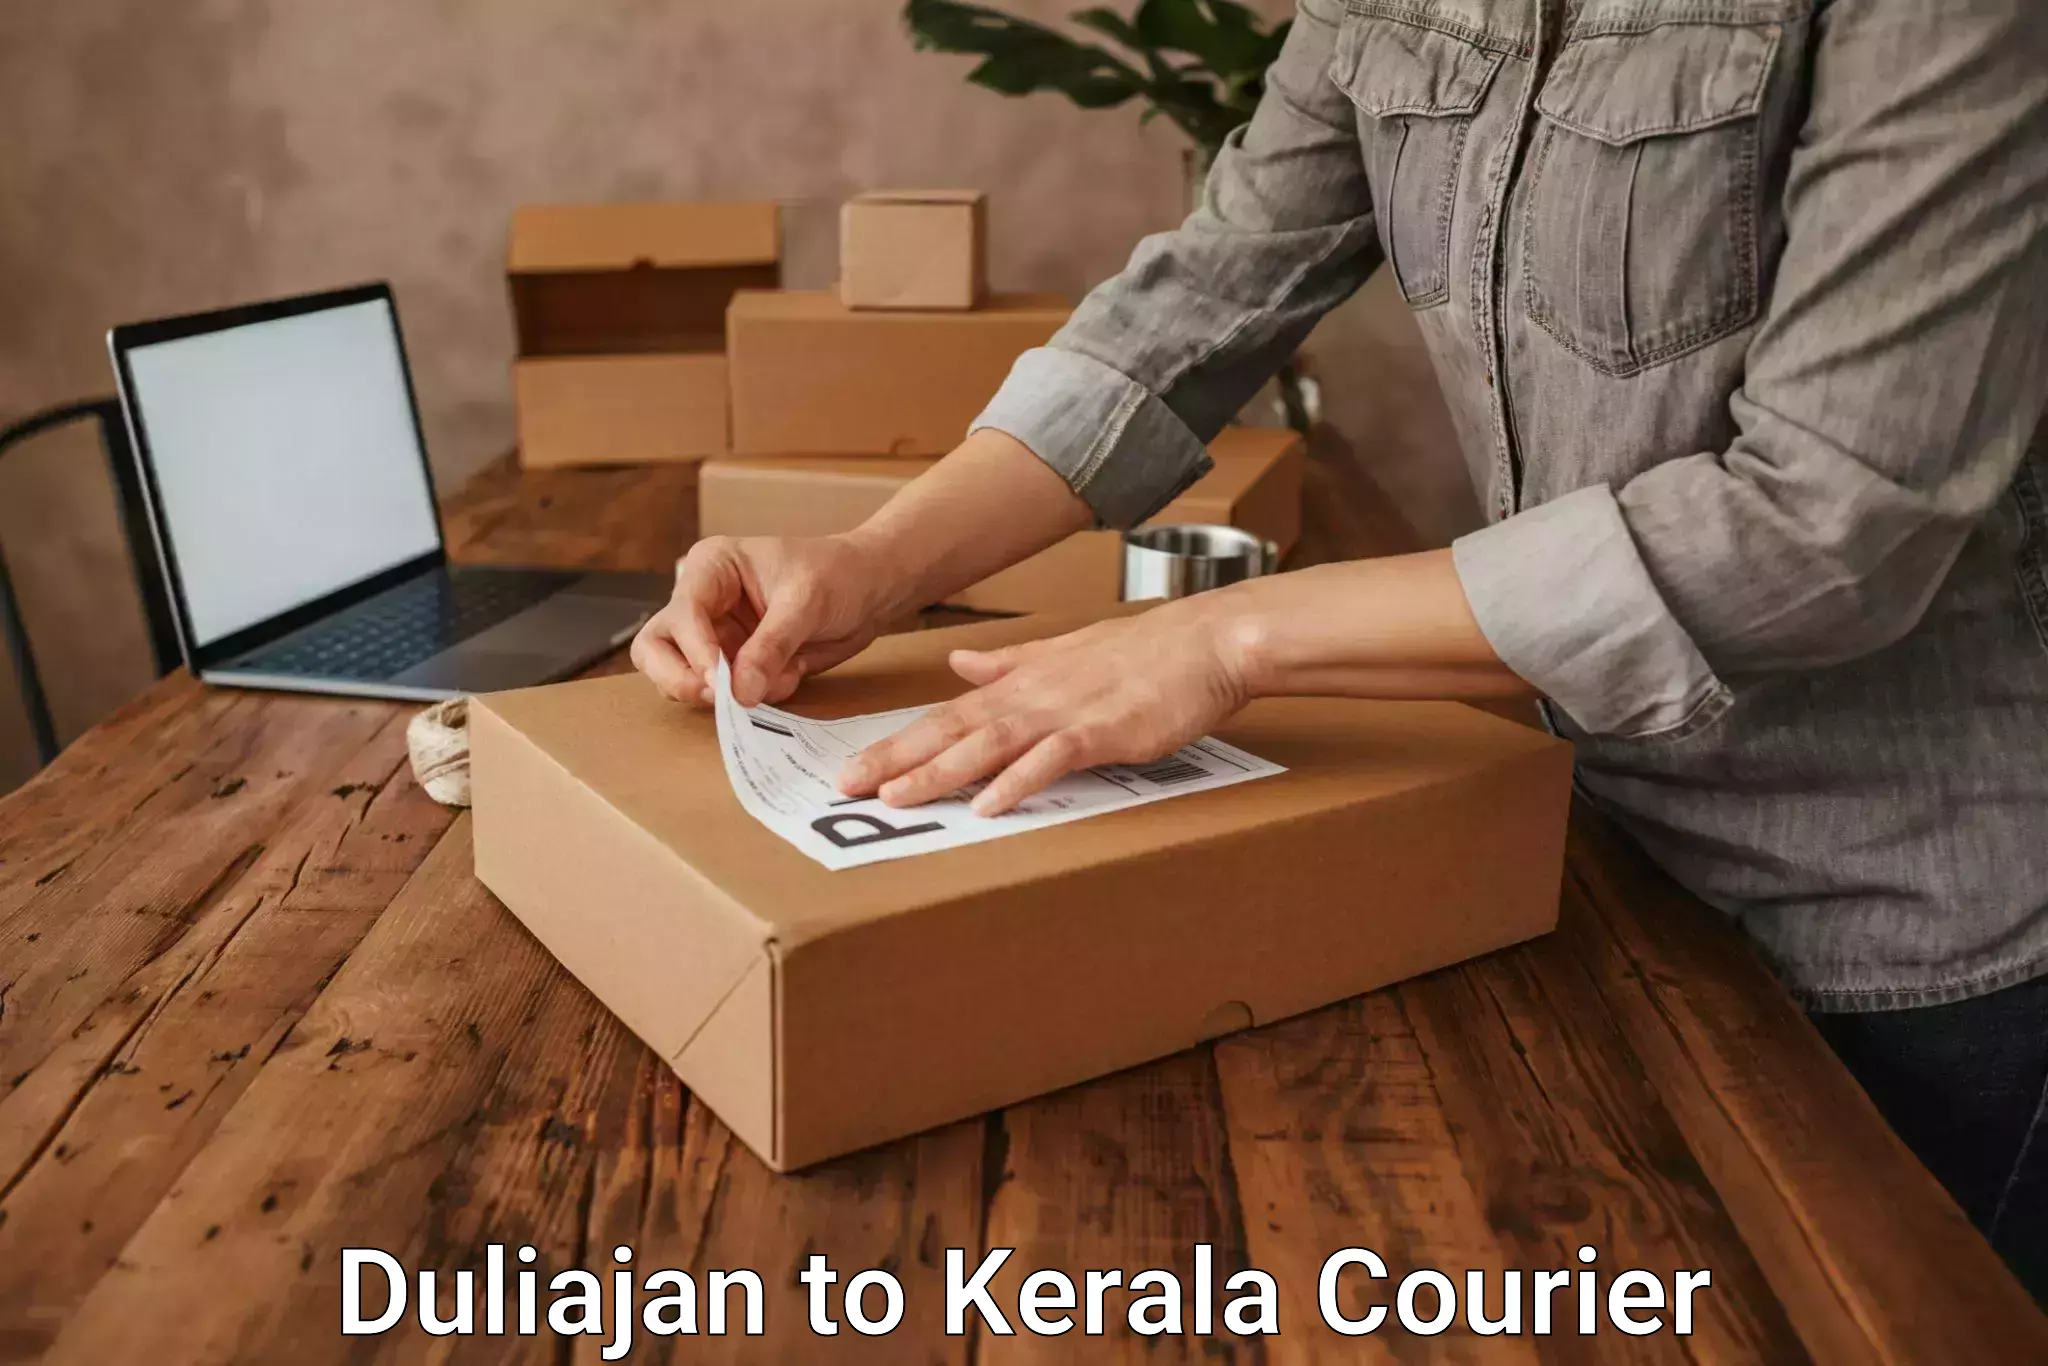 High-priority parcel service Duliajan to Malappuram